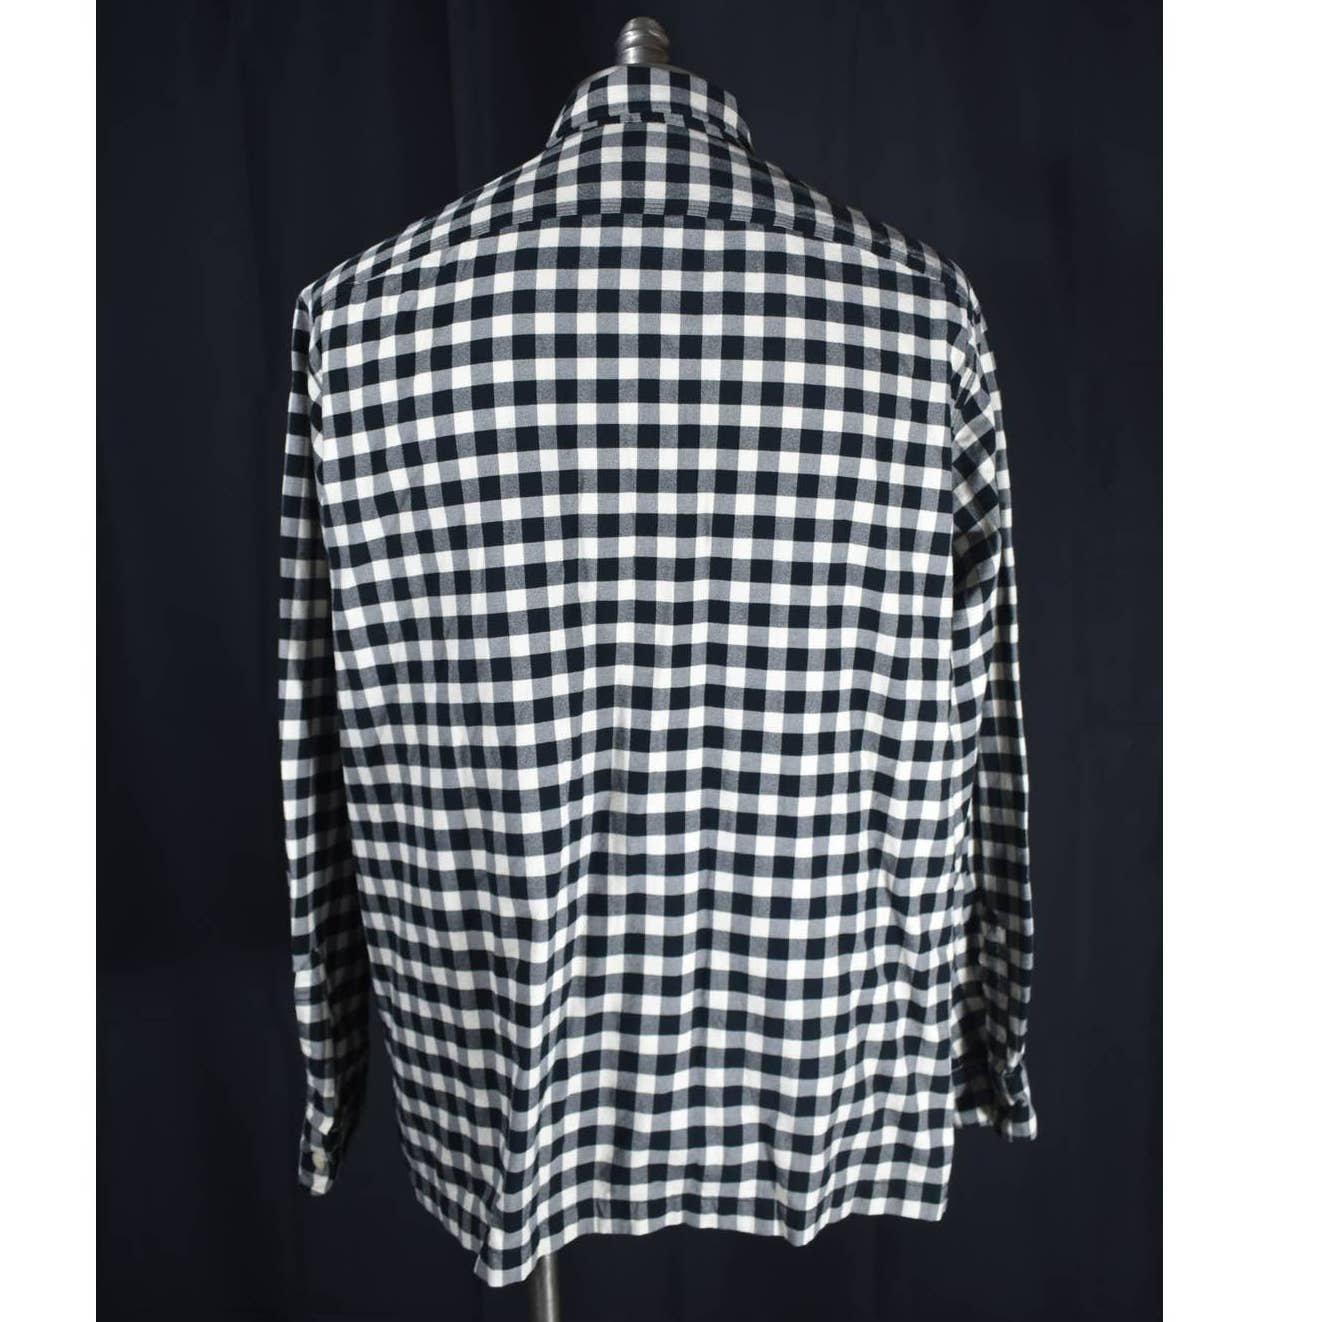 Ralph Lauren Polo Black White Check Flannel Button Up Shirt - XL